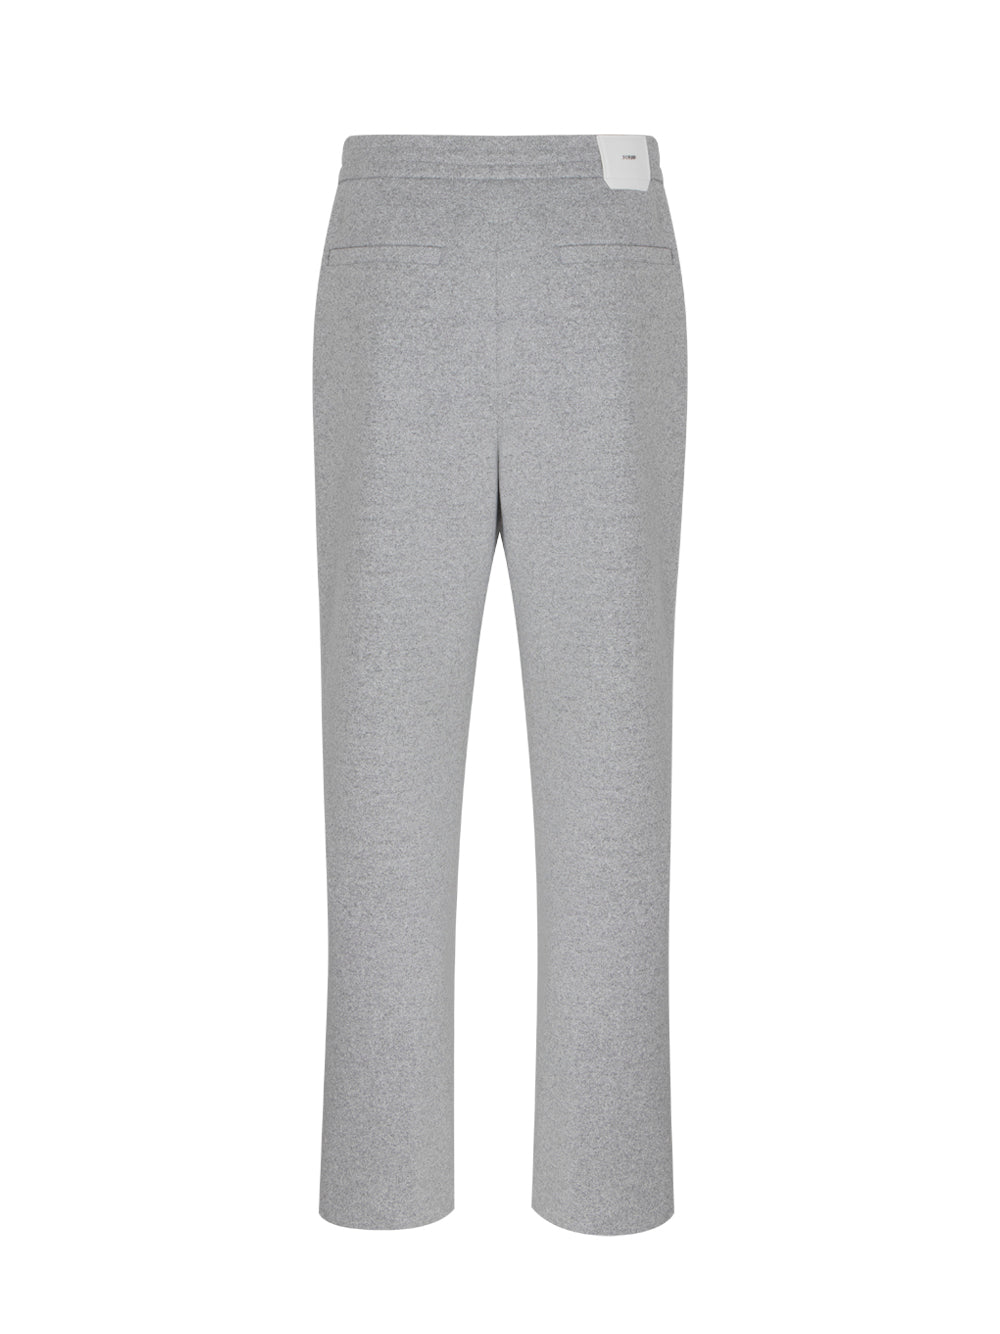 Banding Sweatpants (Grey)